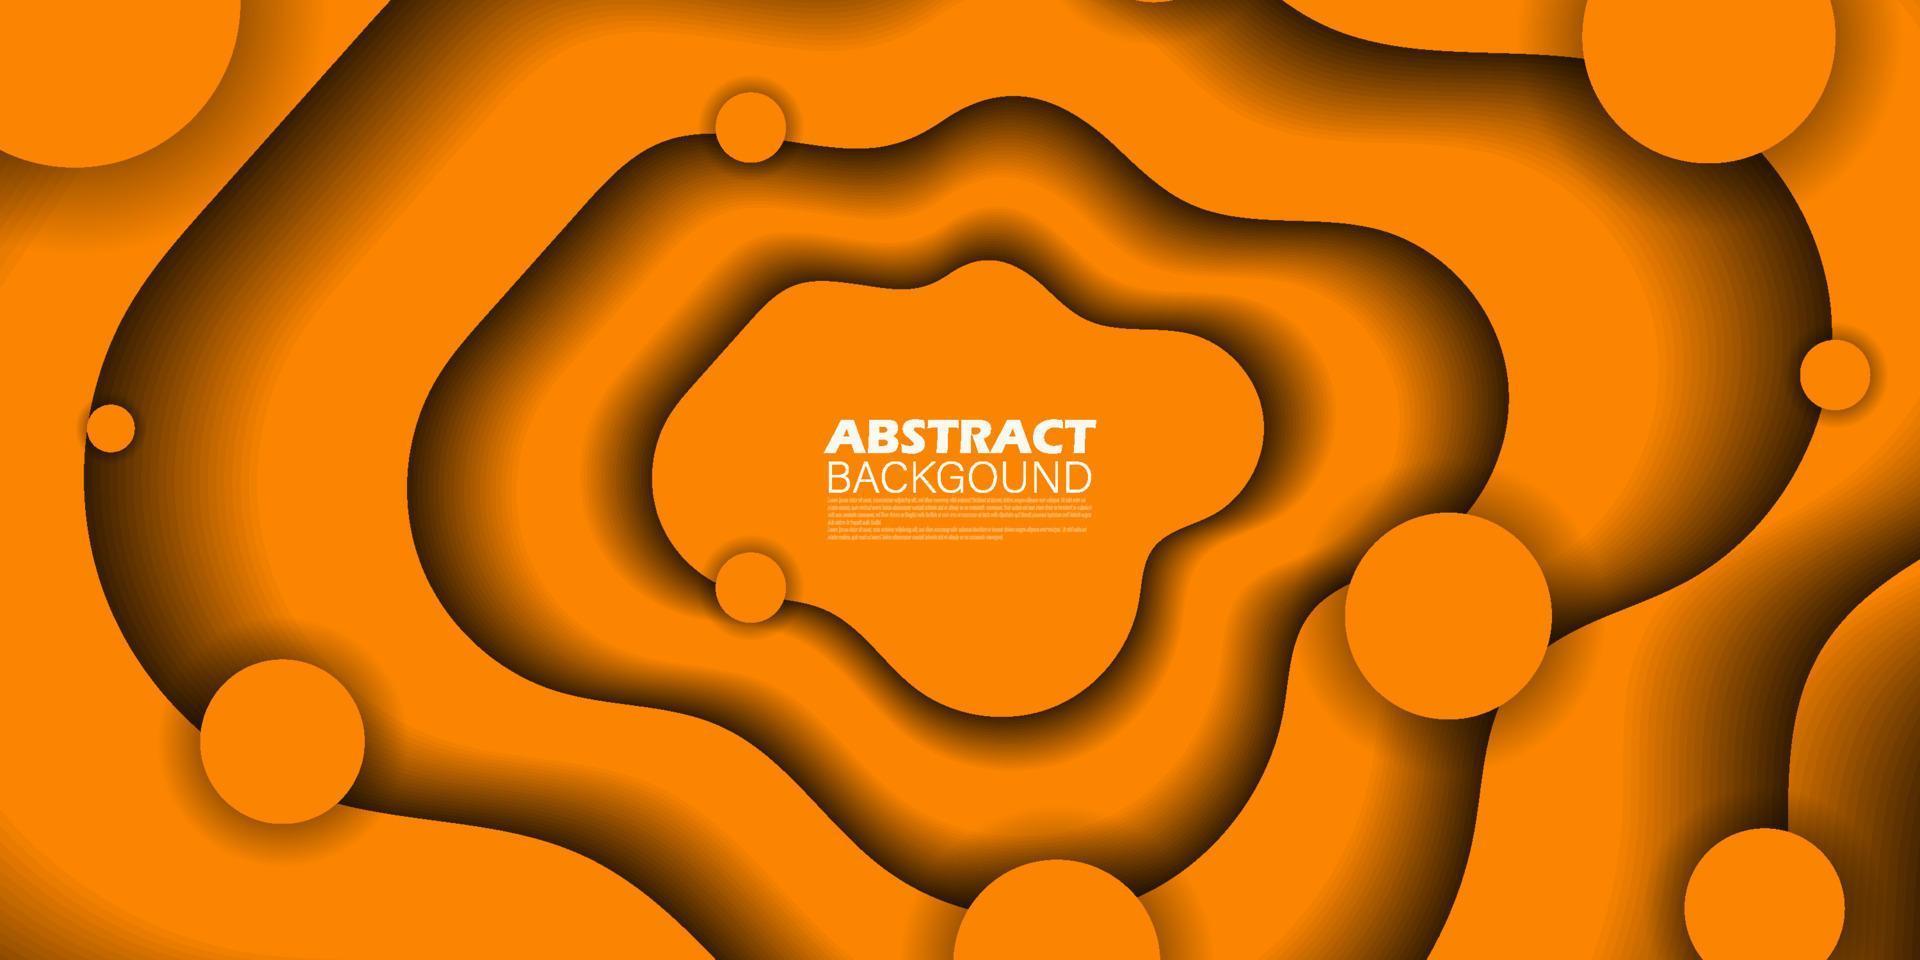 moderno fondo abstracto naranja de corte de papel con curvas en un estilo de arte artesanal de corte de papel 3d realista. ilustración de presentación empresarial moderna o plantilla de proyecto creativo. vector eps10